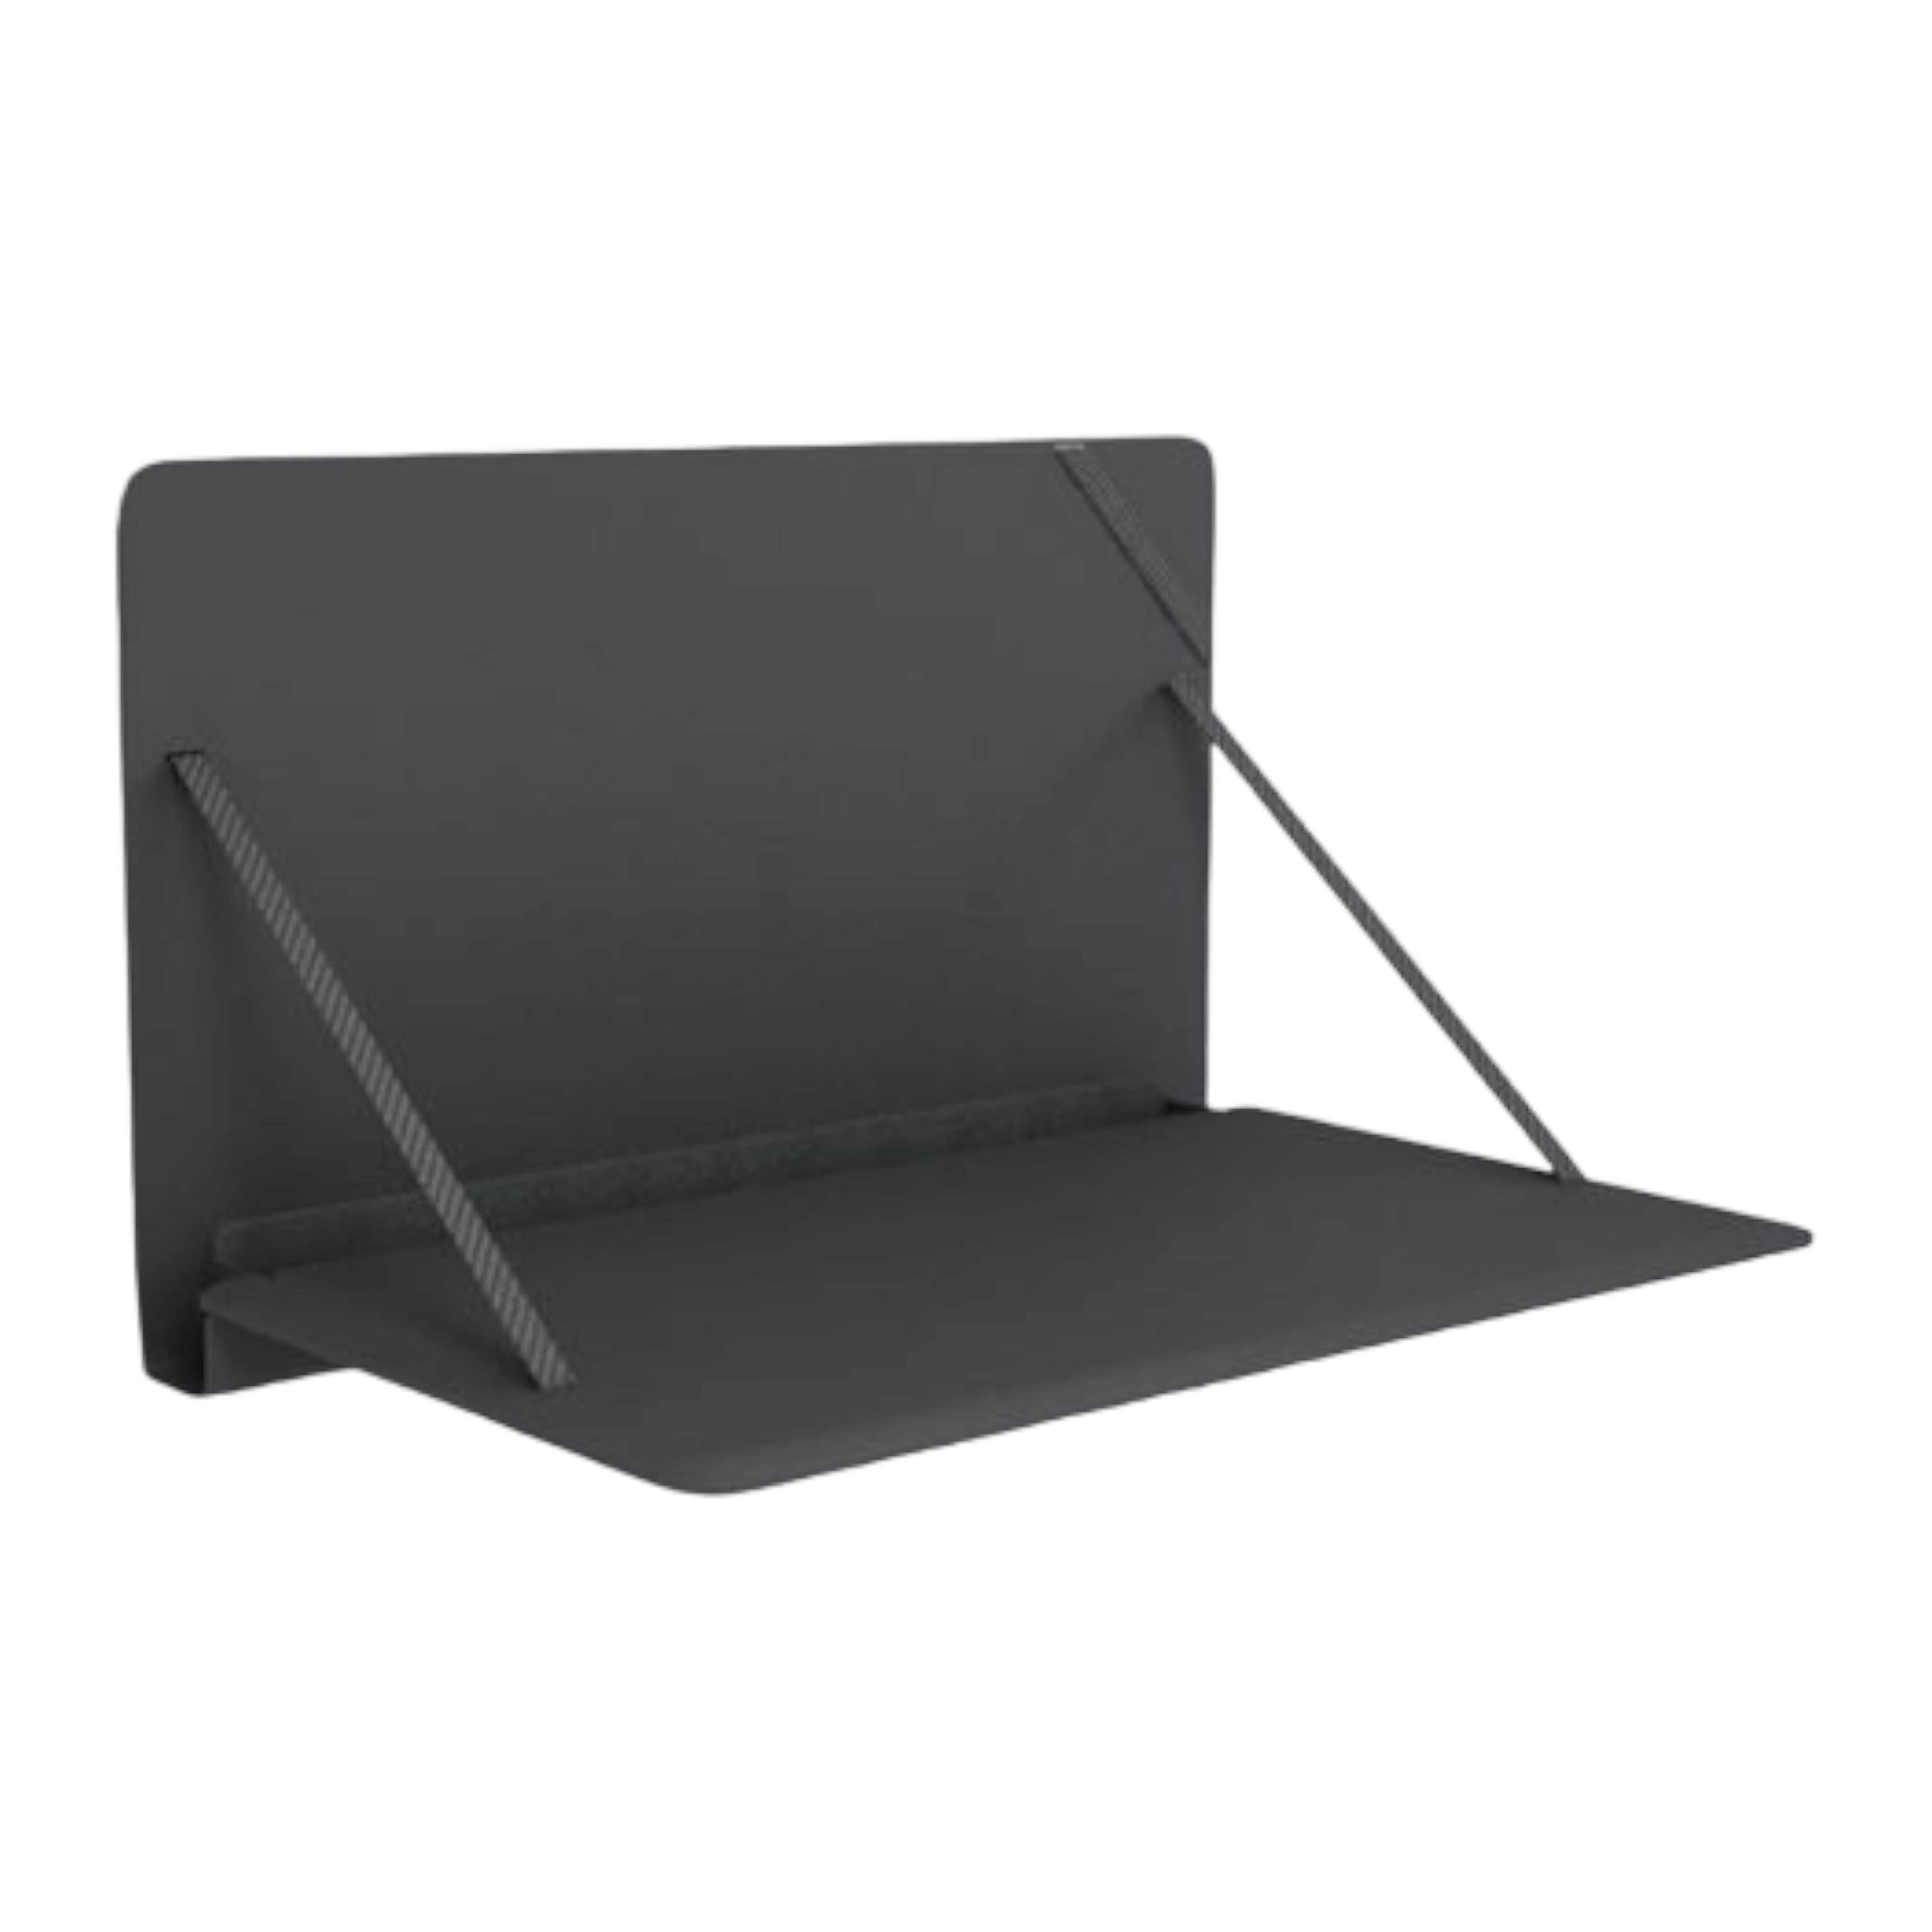 brunner-wandtisch-notebook-9032-tischplatte-mdf-mit-abgerundeten-kanten-schwarz-matt-beschichtet-mf-2